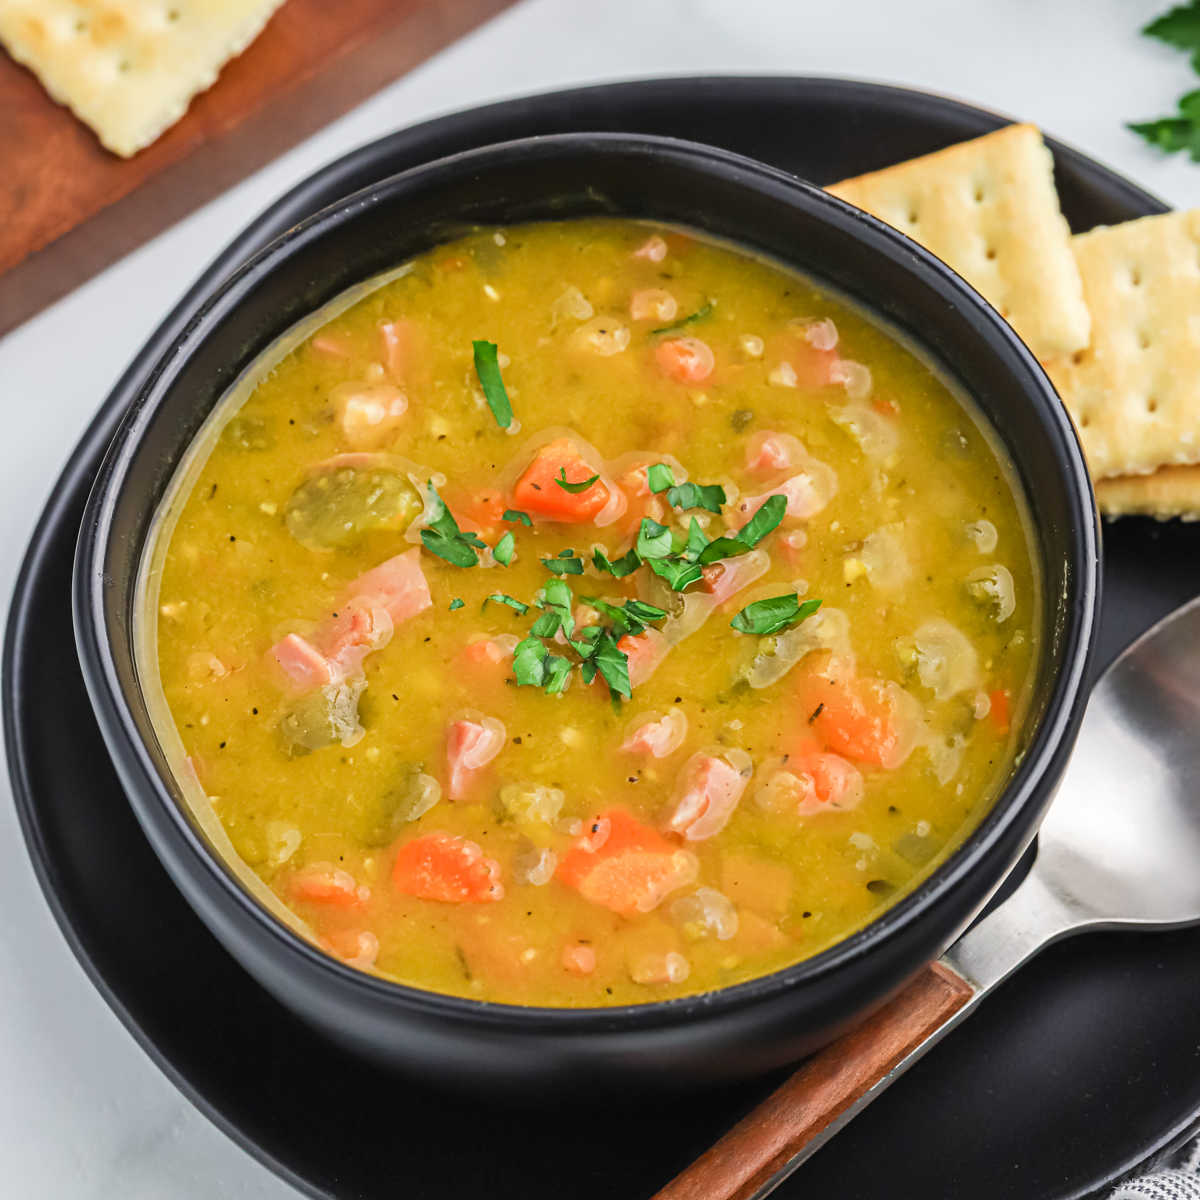 https://www.eatingonadime.com/wp-content/uploads/2022/11/1200x1800-Crock-Pot-Split-Pea-Soup-Square-Pic.jpg